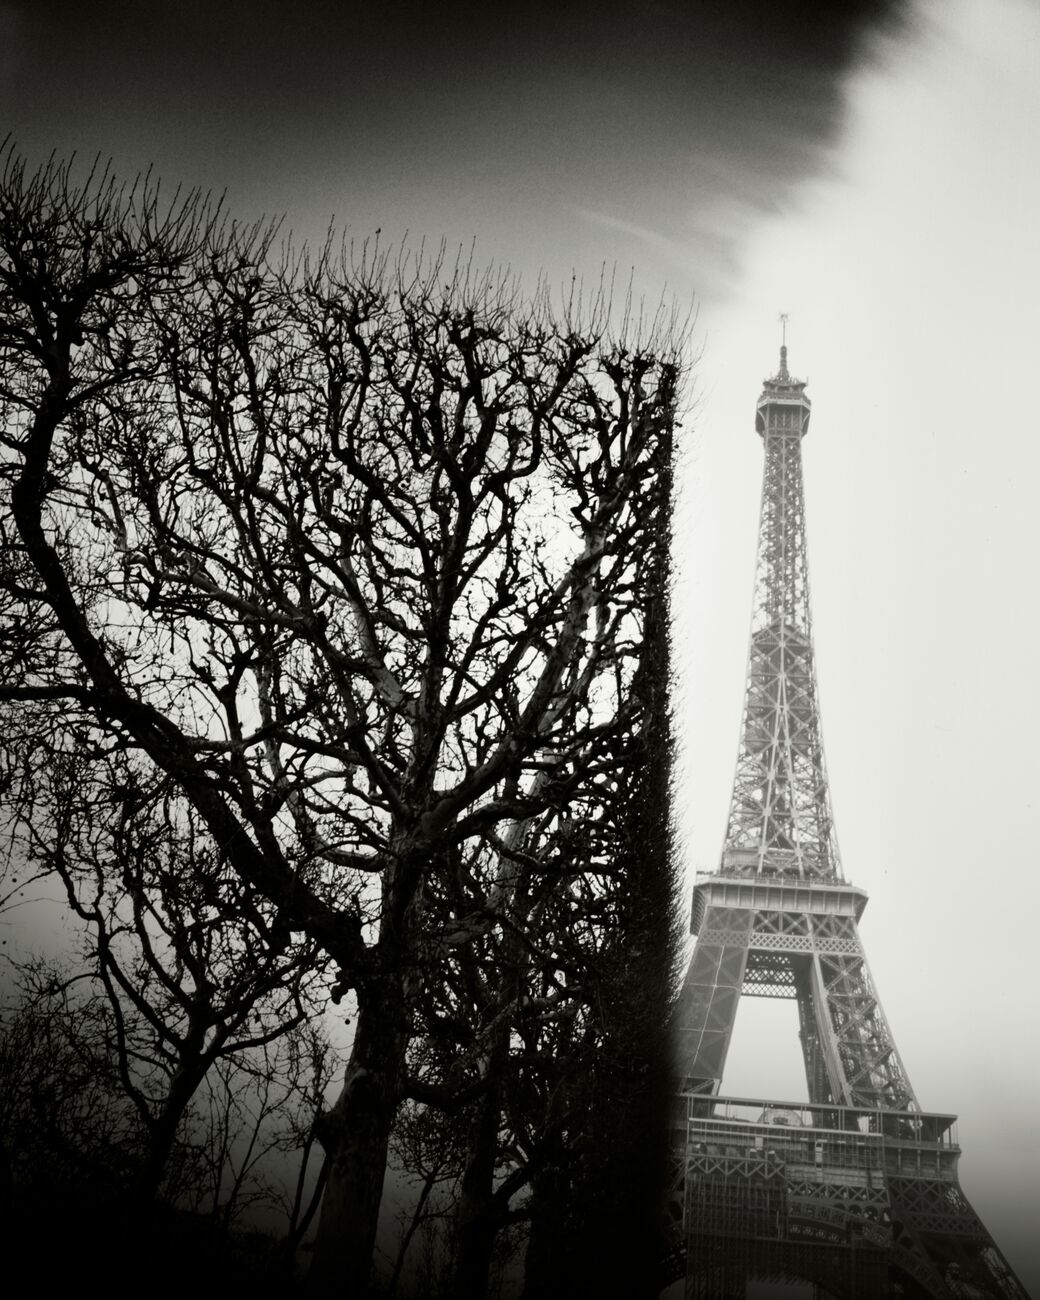 Trimmed Trees, Champ De Mars, Paris, France. February 2022. Ref-11661 - Denis Olivier Photography